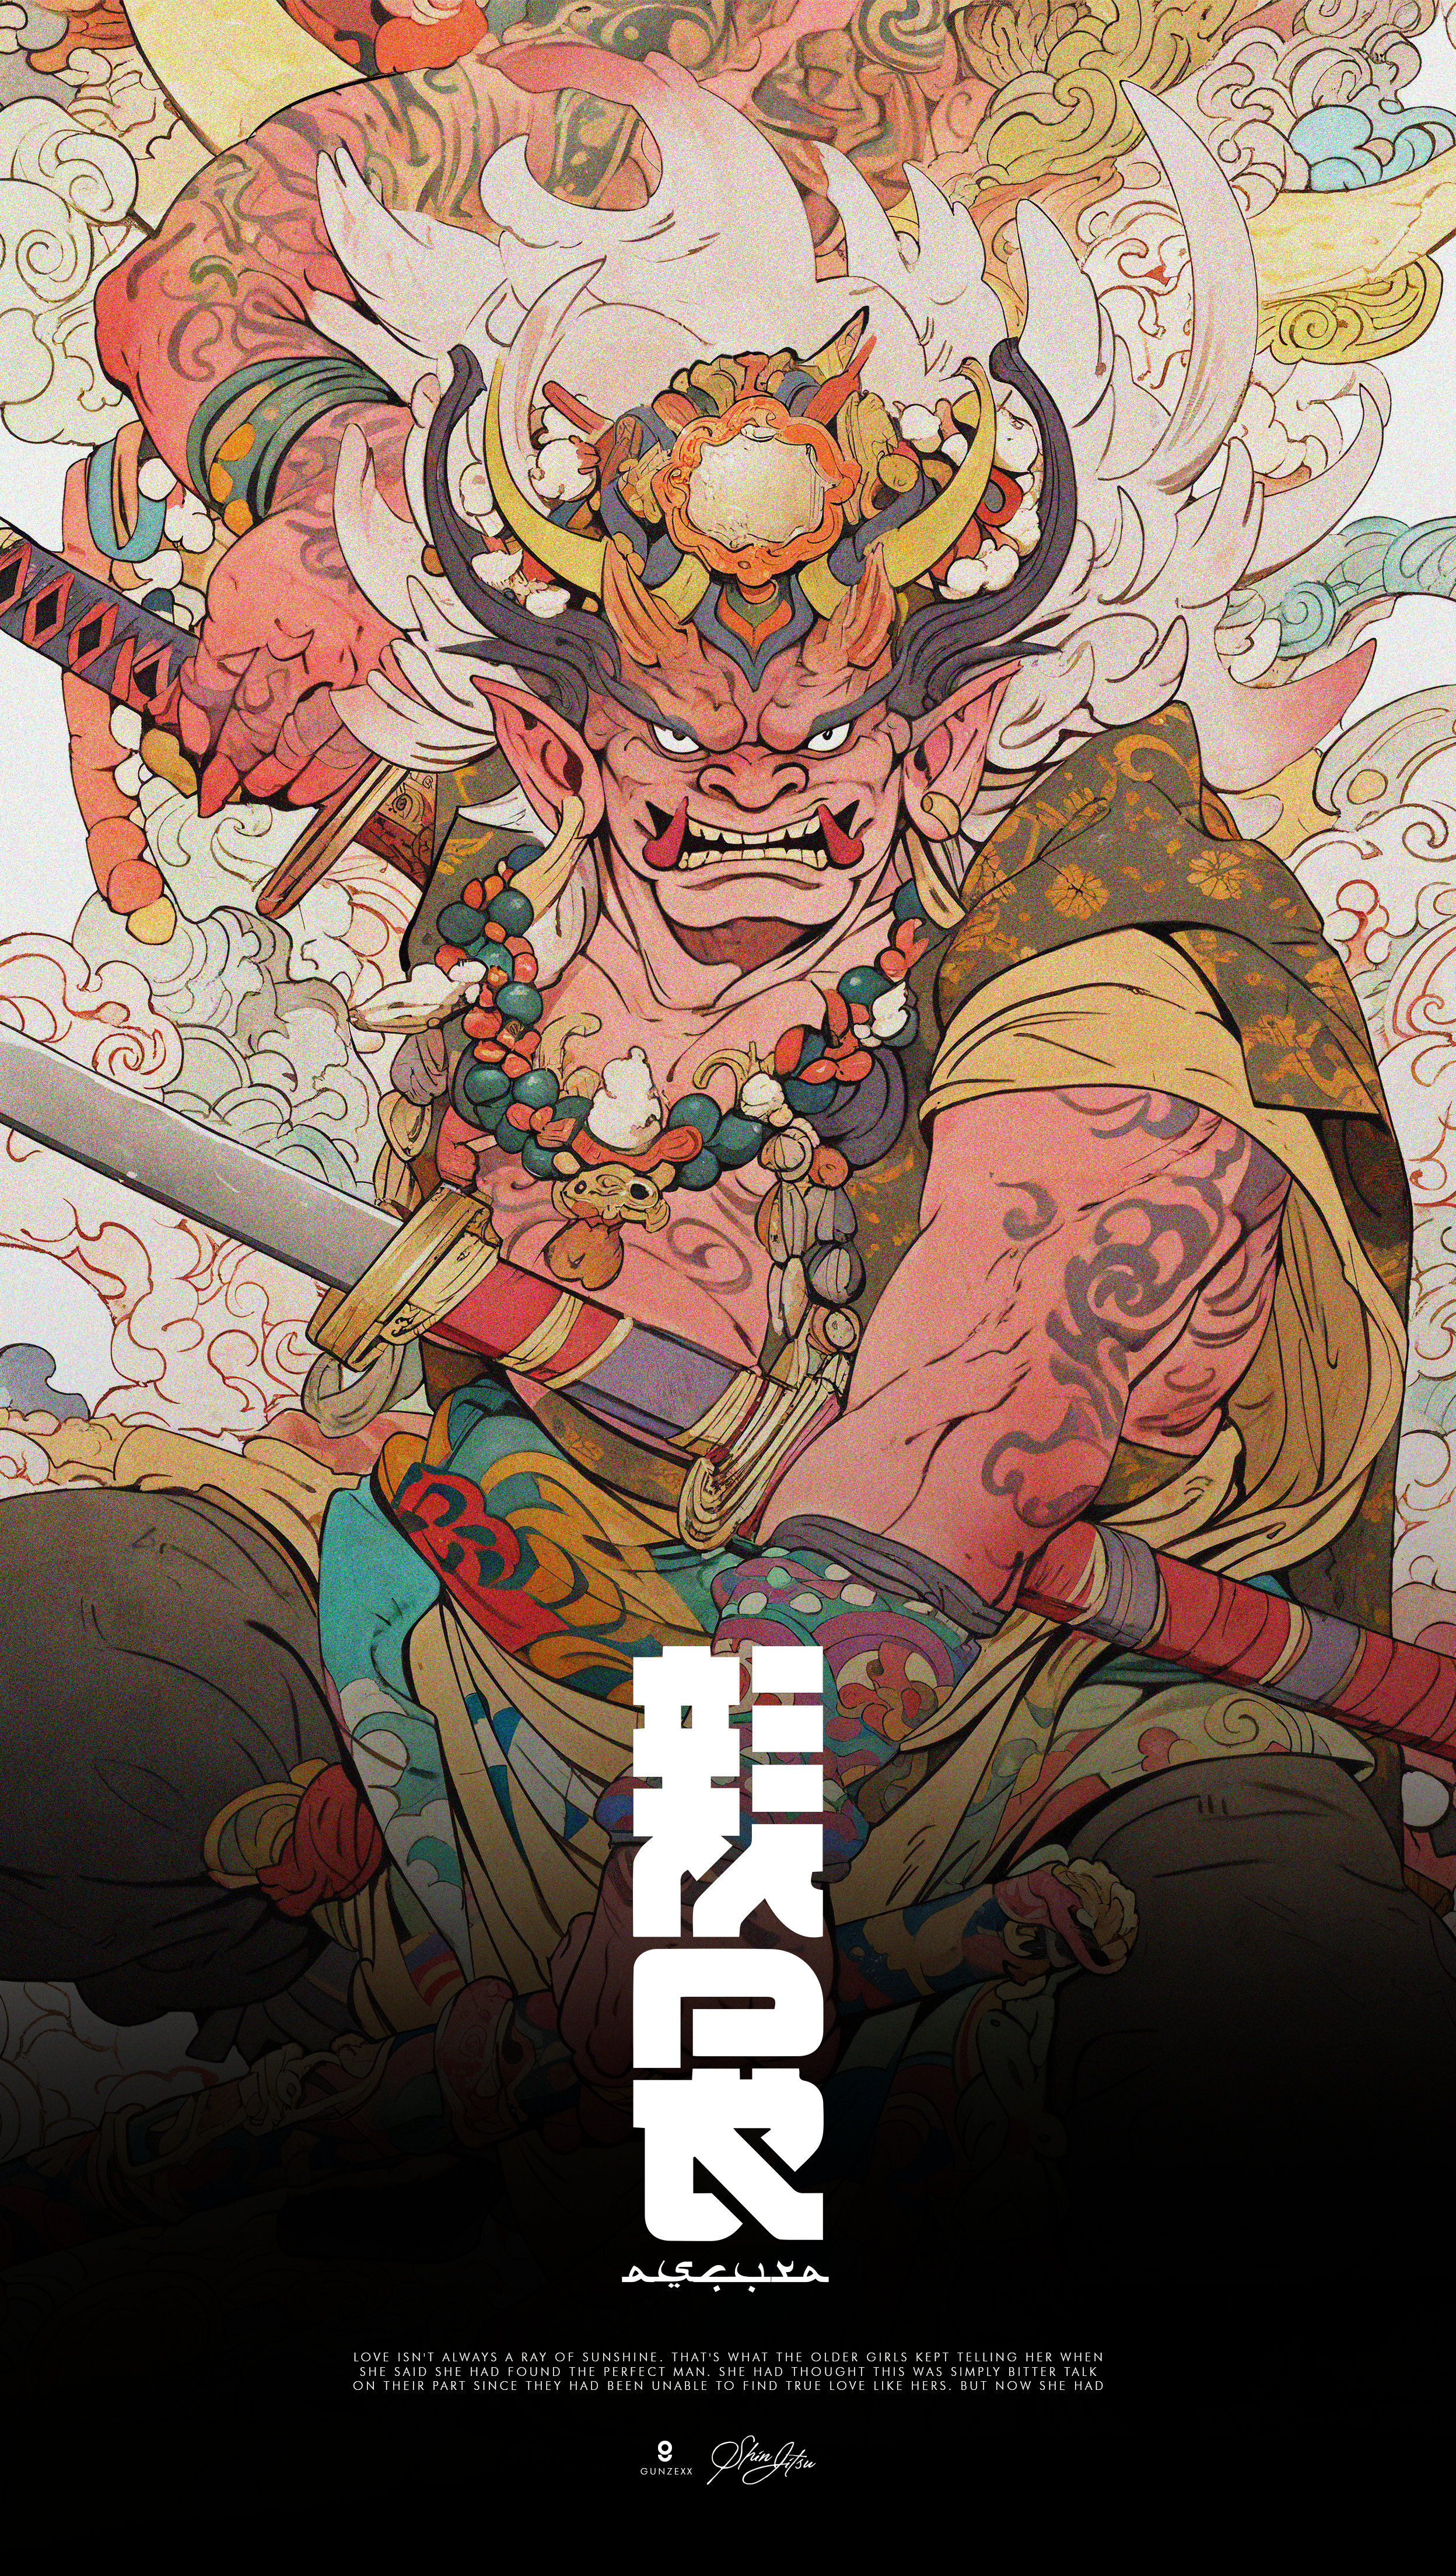 A fierce warrior holding a sword in a fantasy artwork.